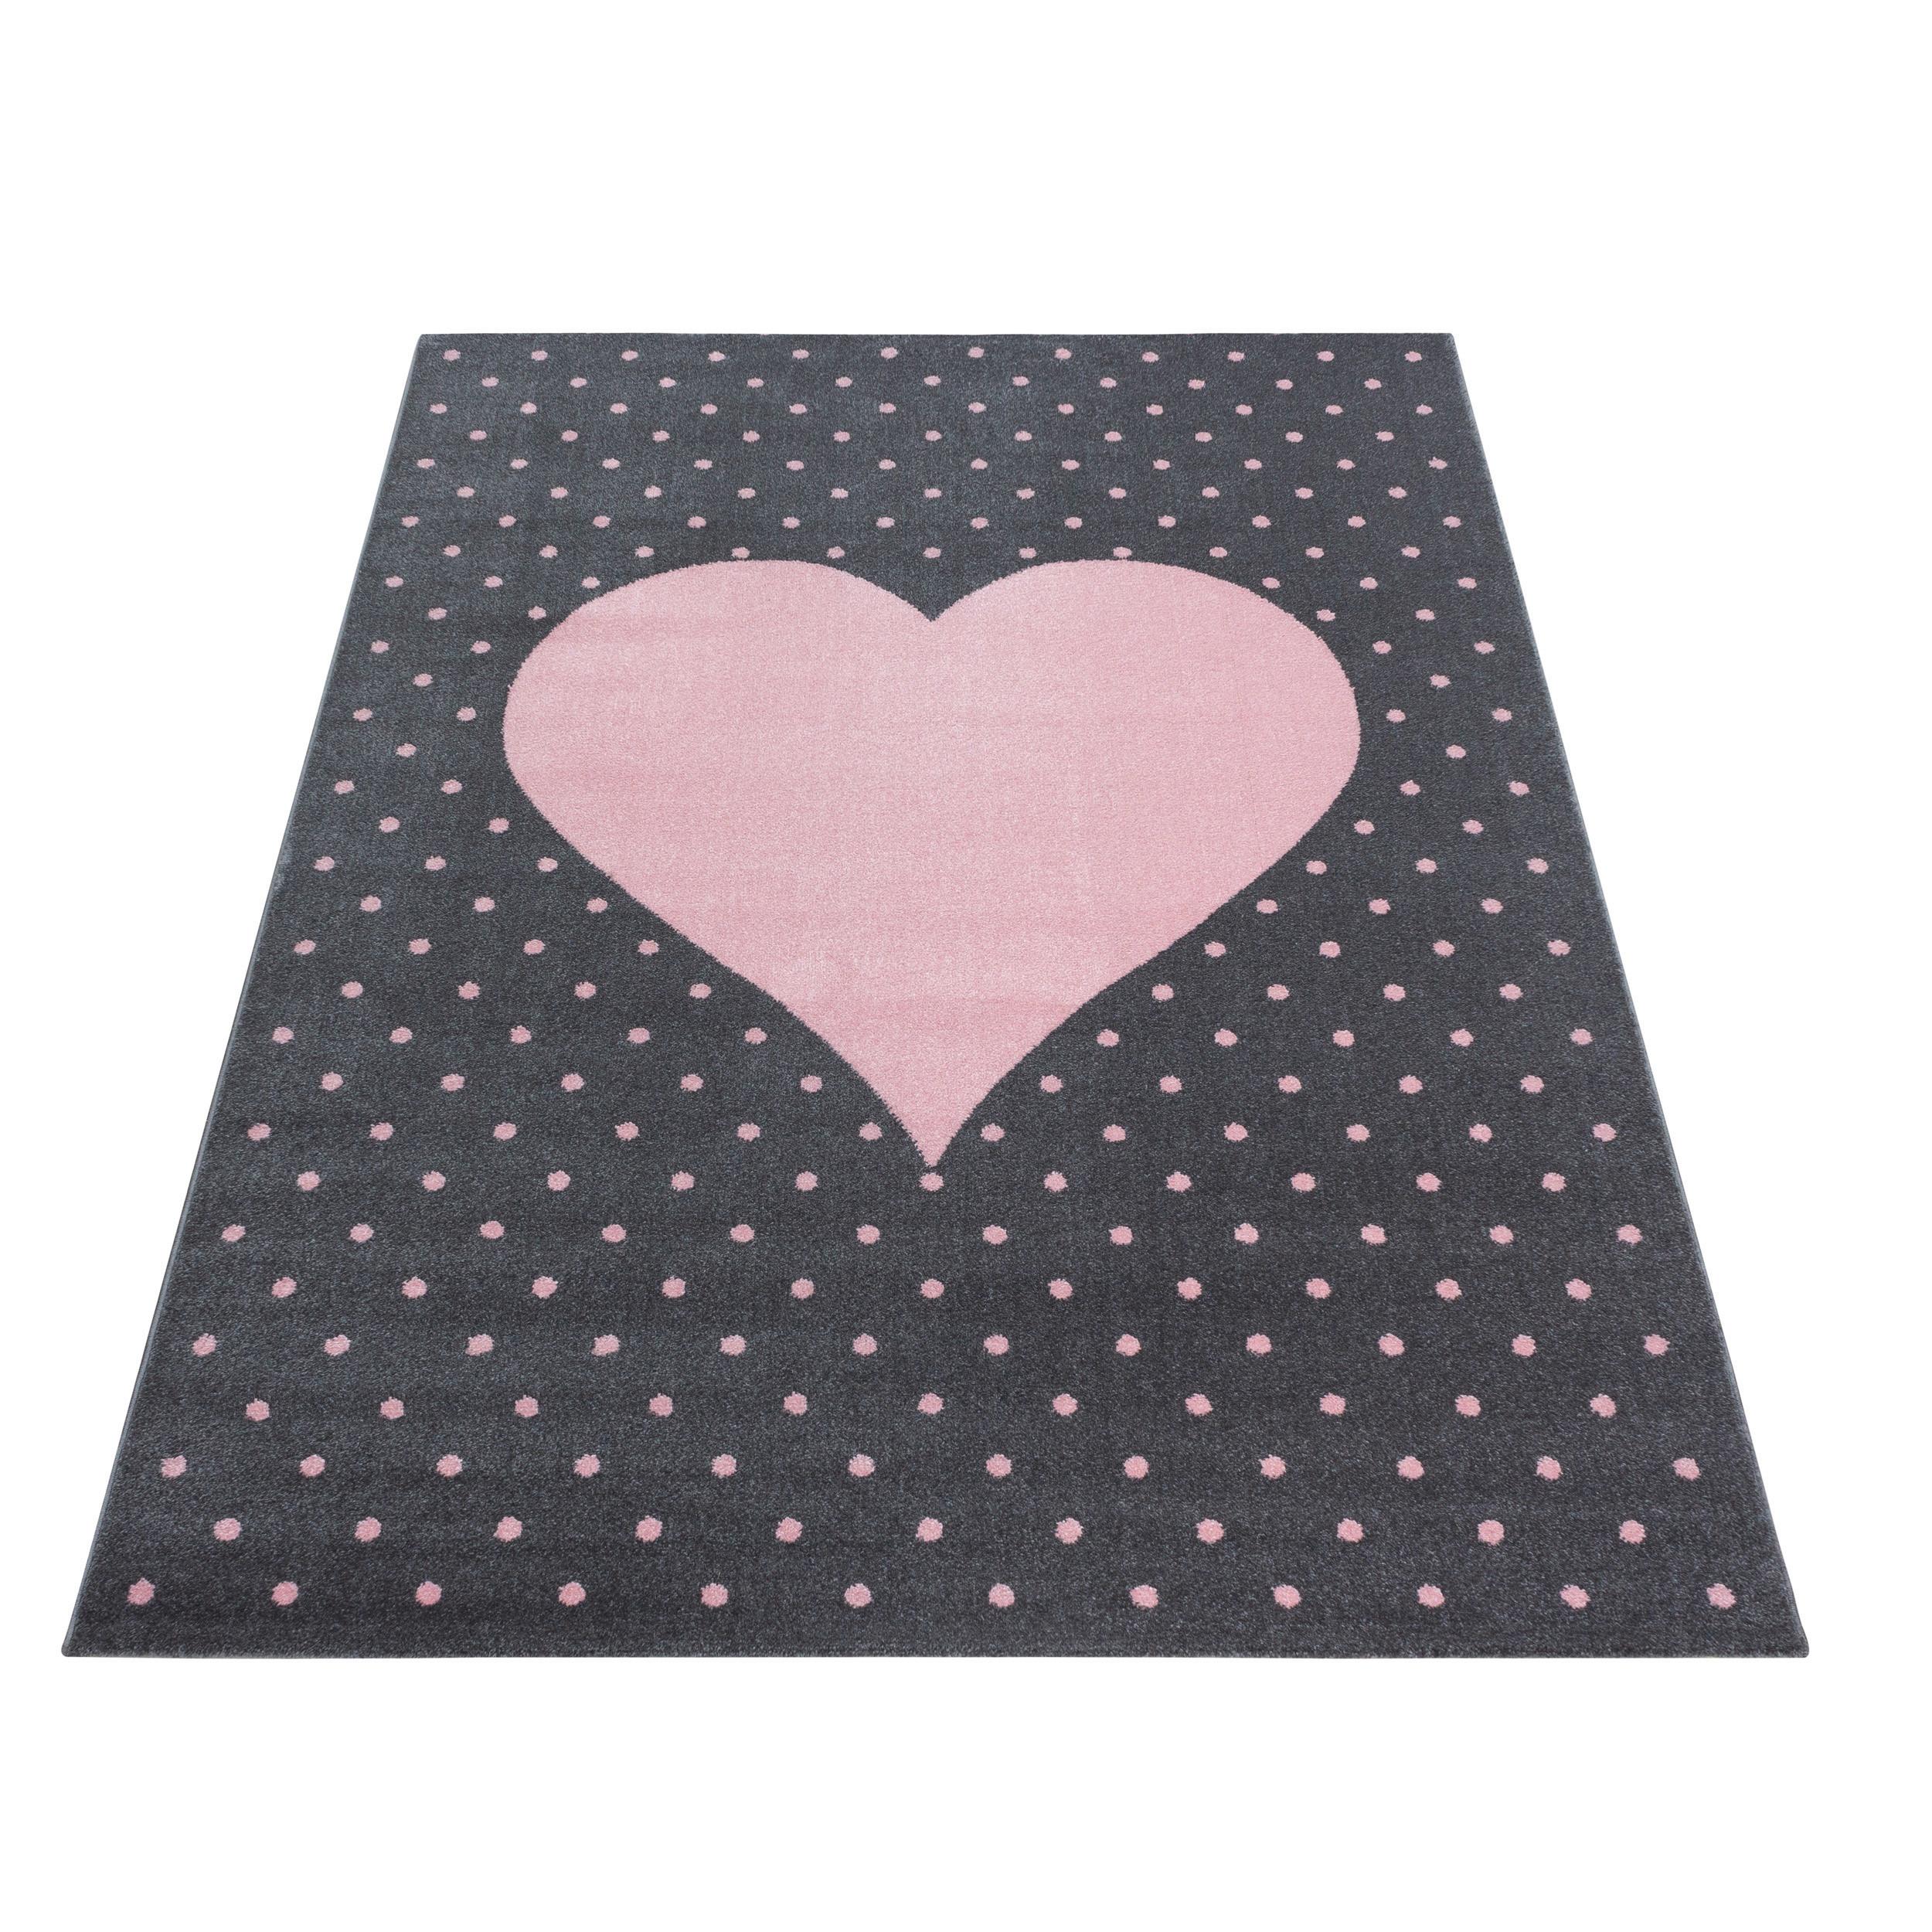 Detský Koberec Srdce 80x150 - pink, Trend, textil (80/150cm) - Ben'n'jen